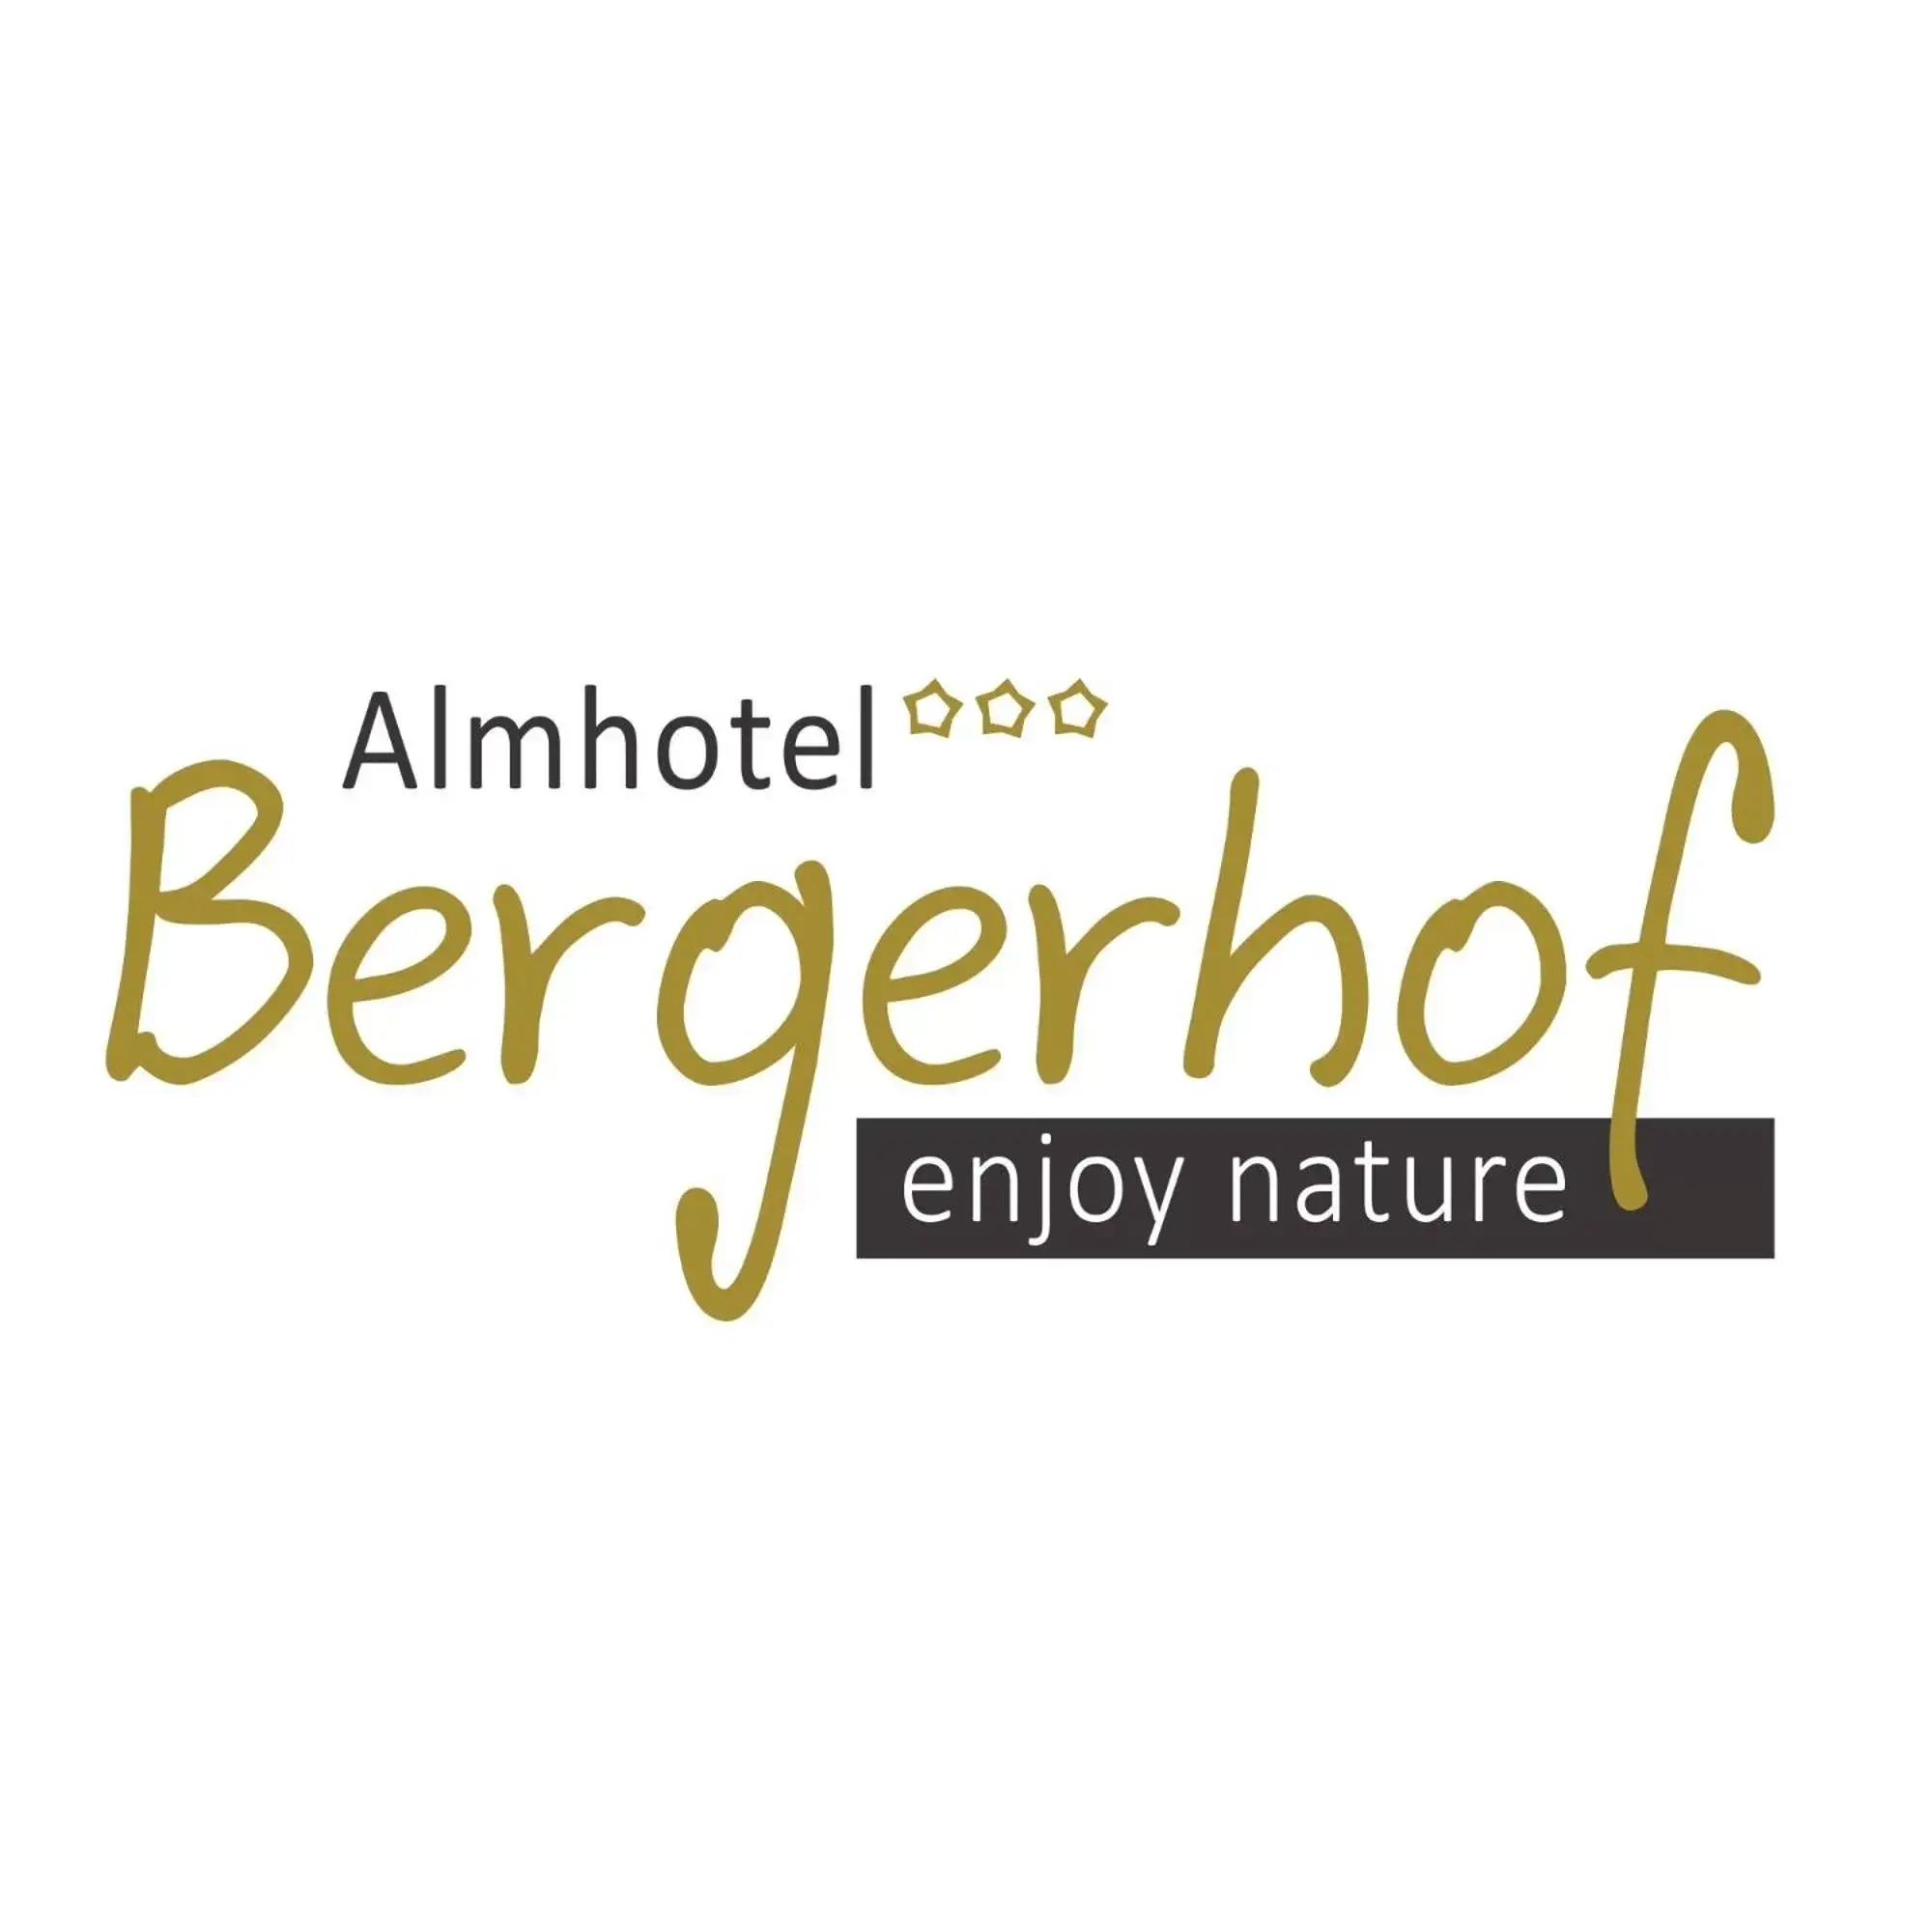 Logo/Certificate/Sign in Almhotel Bergerhof